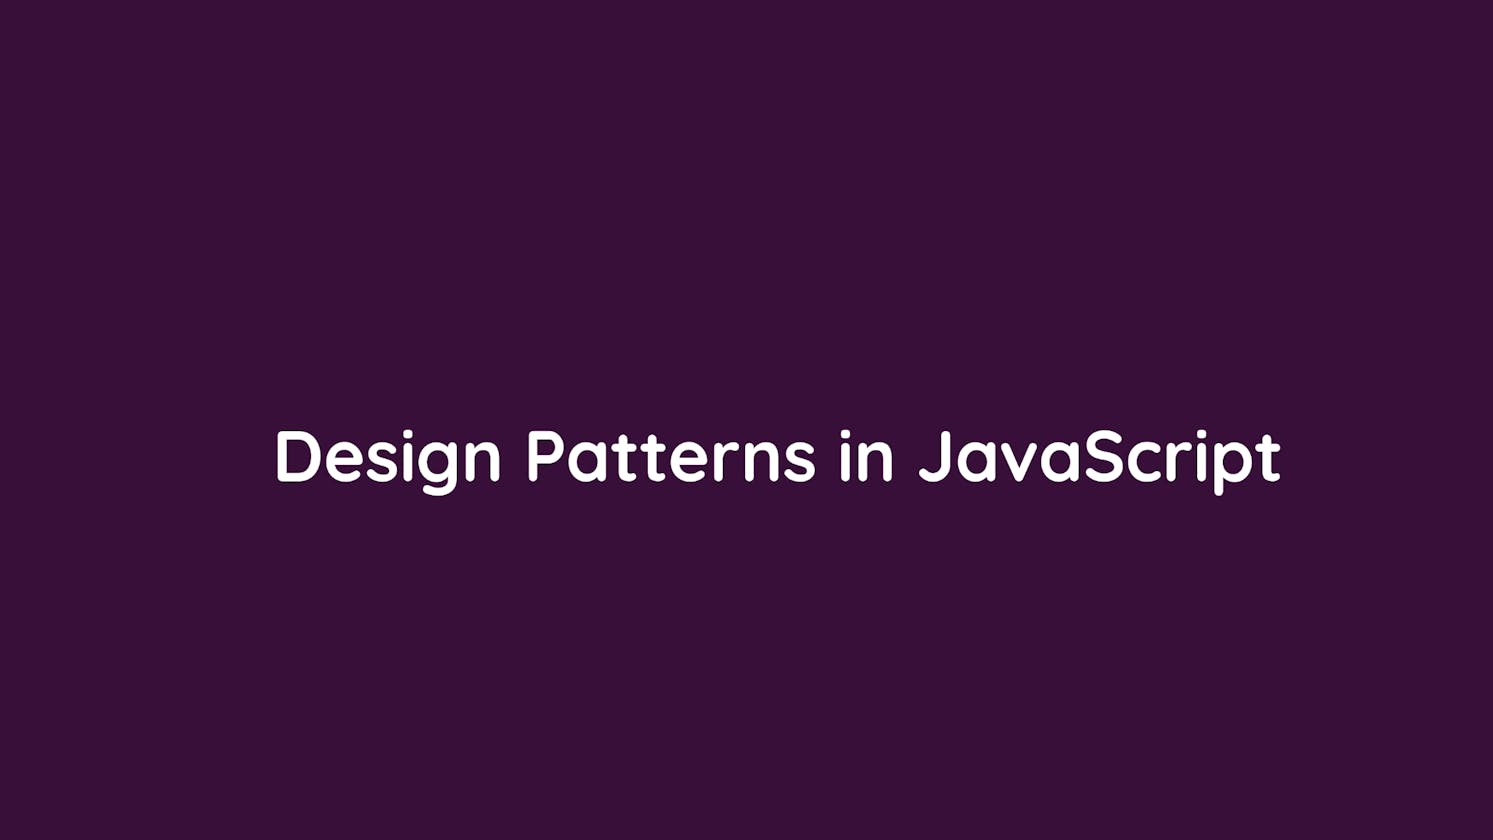 Design Patterns Implementation in JavaScript